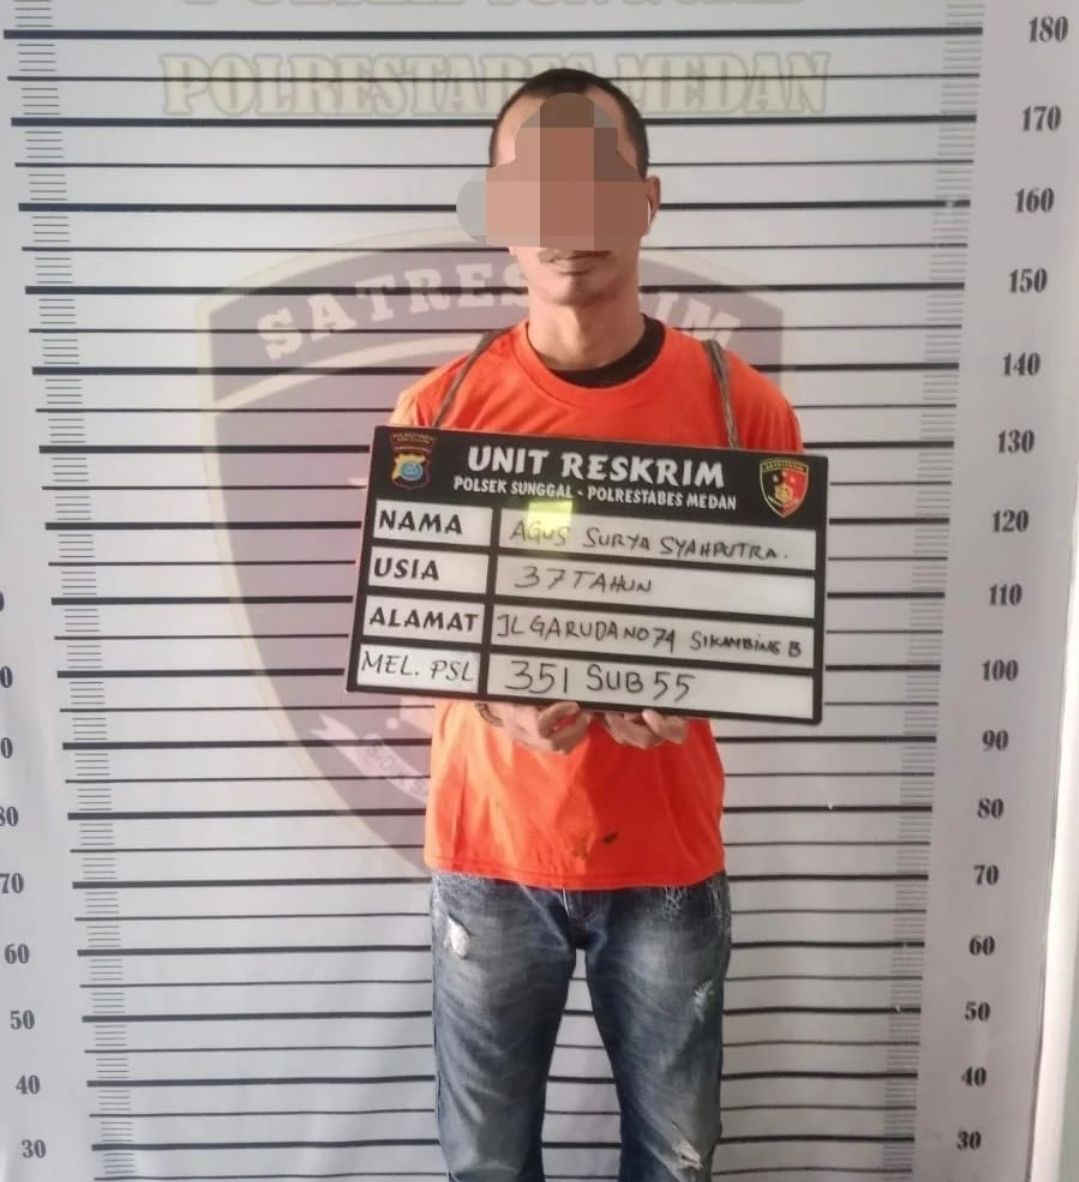 Polisi Tangkap Penganiaya Dishub di Medan, Satu Pelaku Lainnya Masih Buron